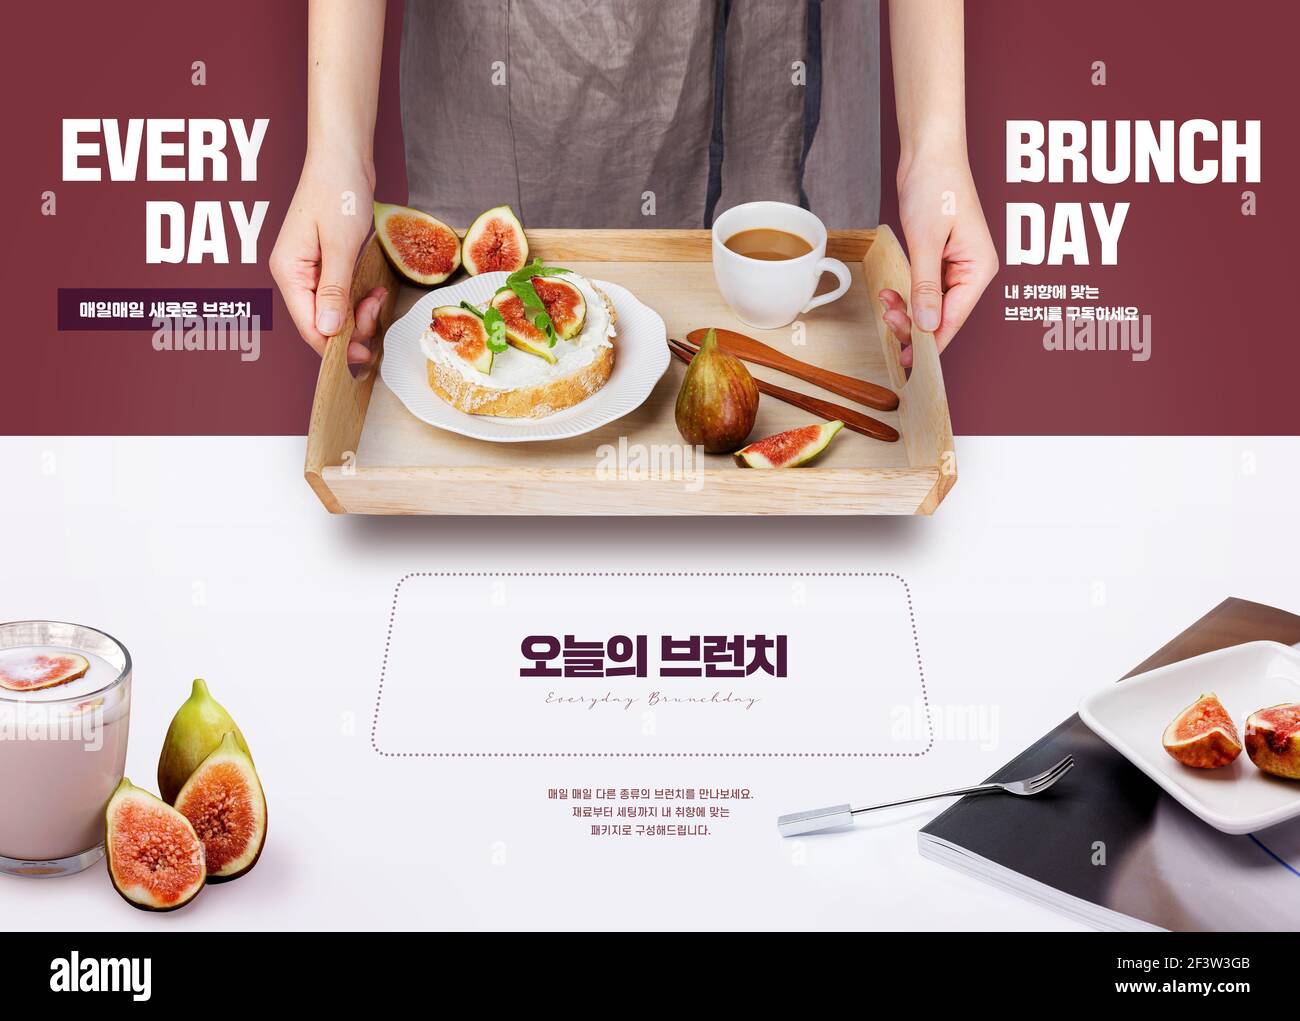 Poster zum Brunch Meal Kit Abonnement Stockfoto